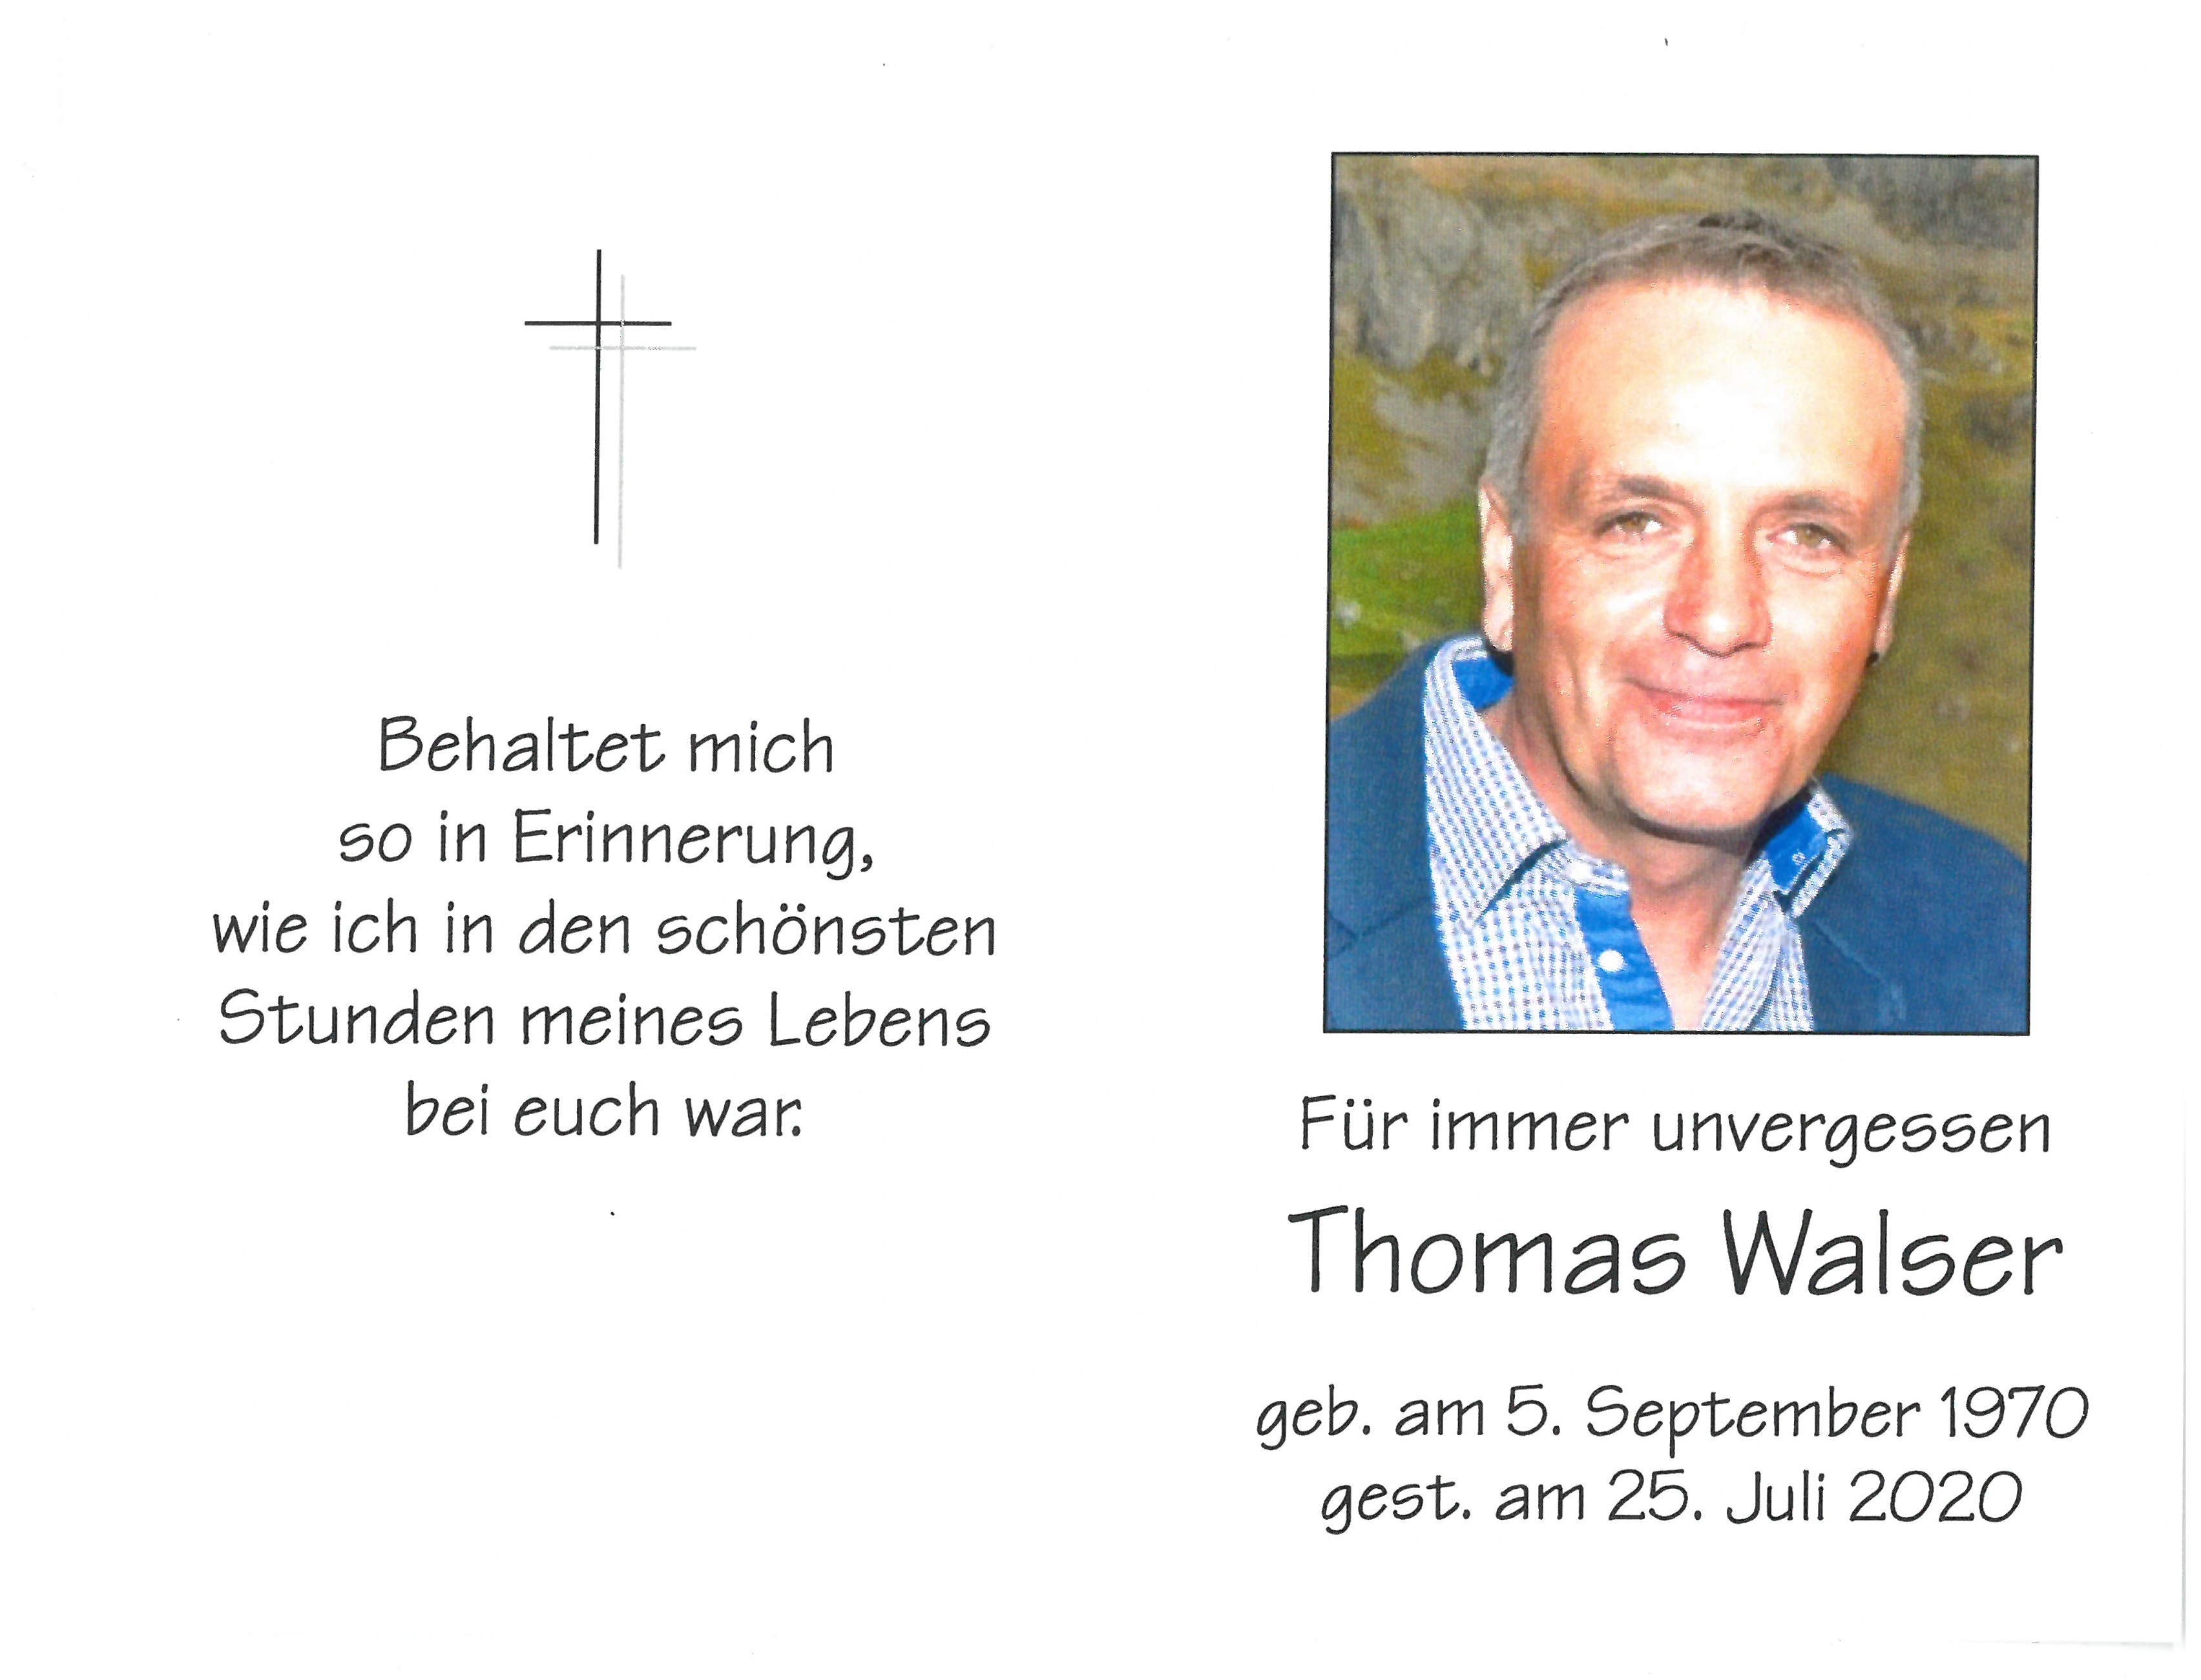 Thomas Walser